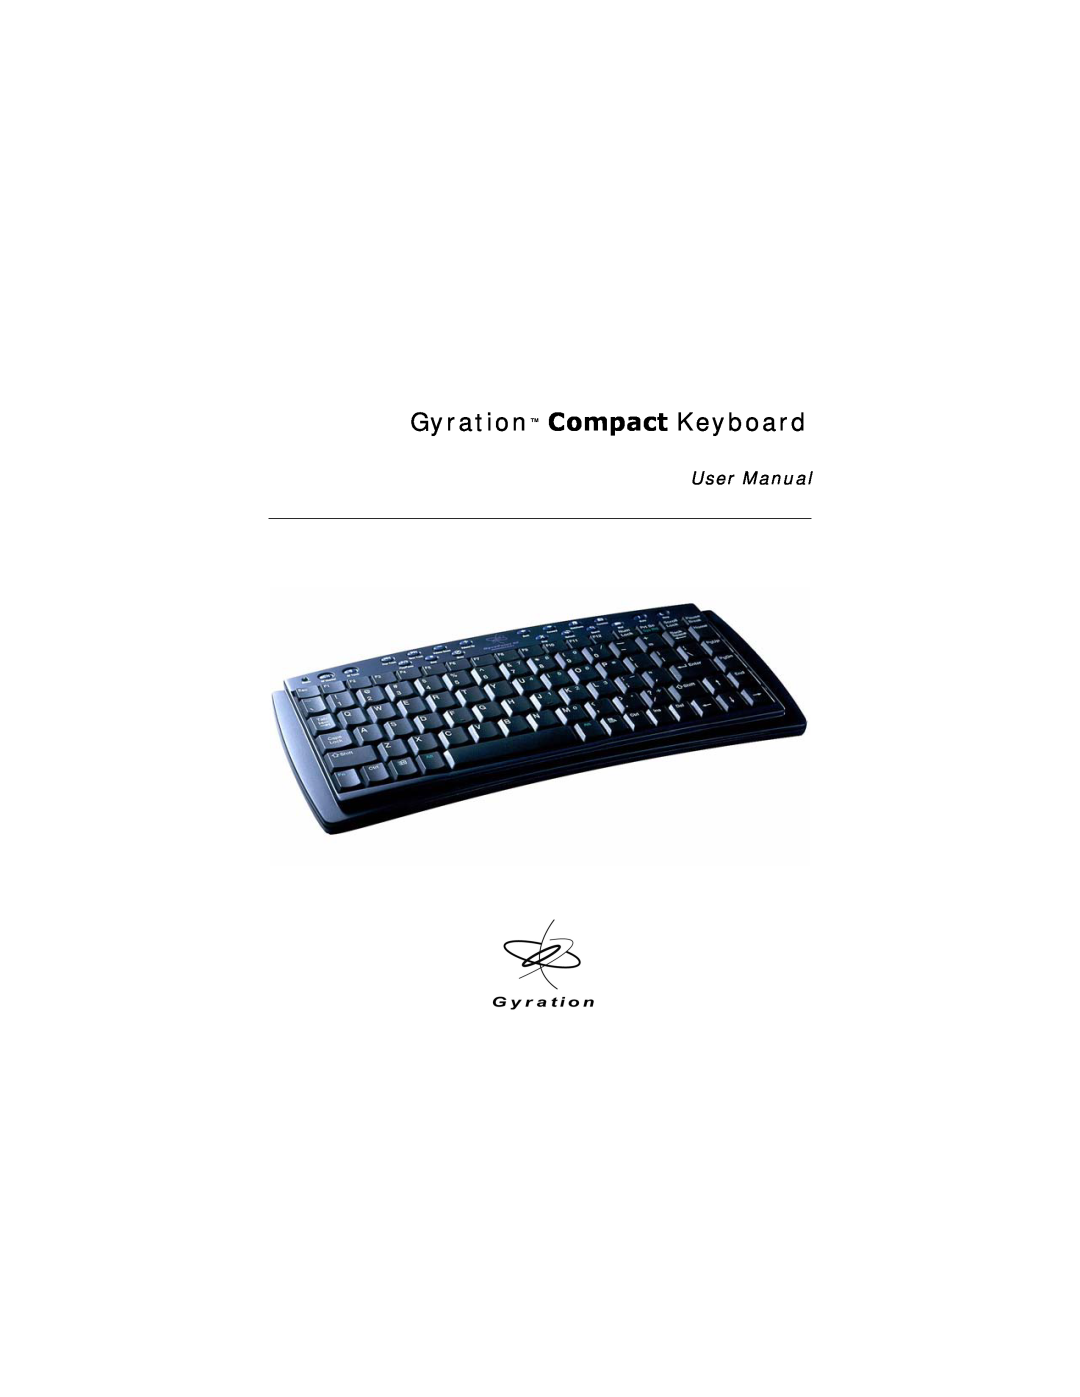 Gyration user manual Gyration Compact Keyboard, User Manual 